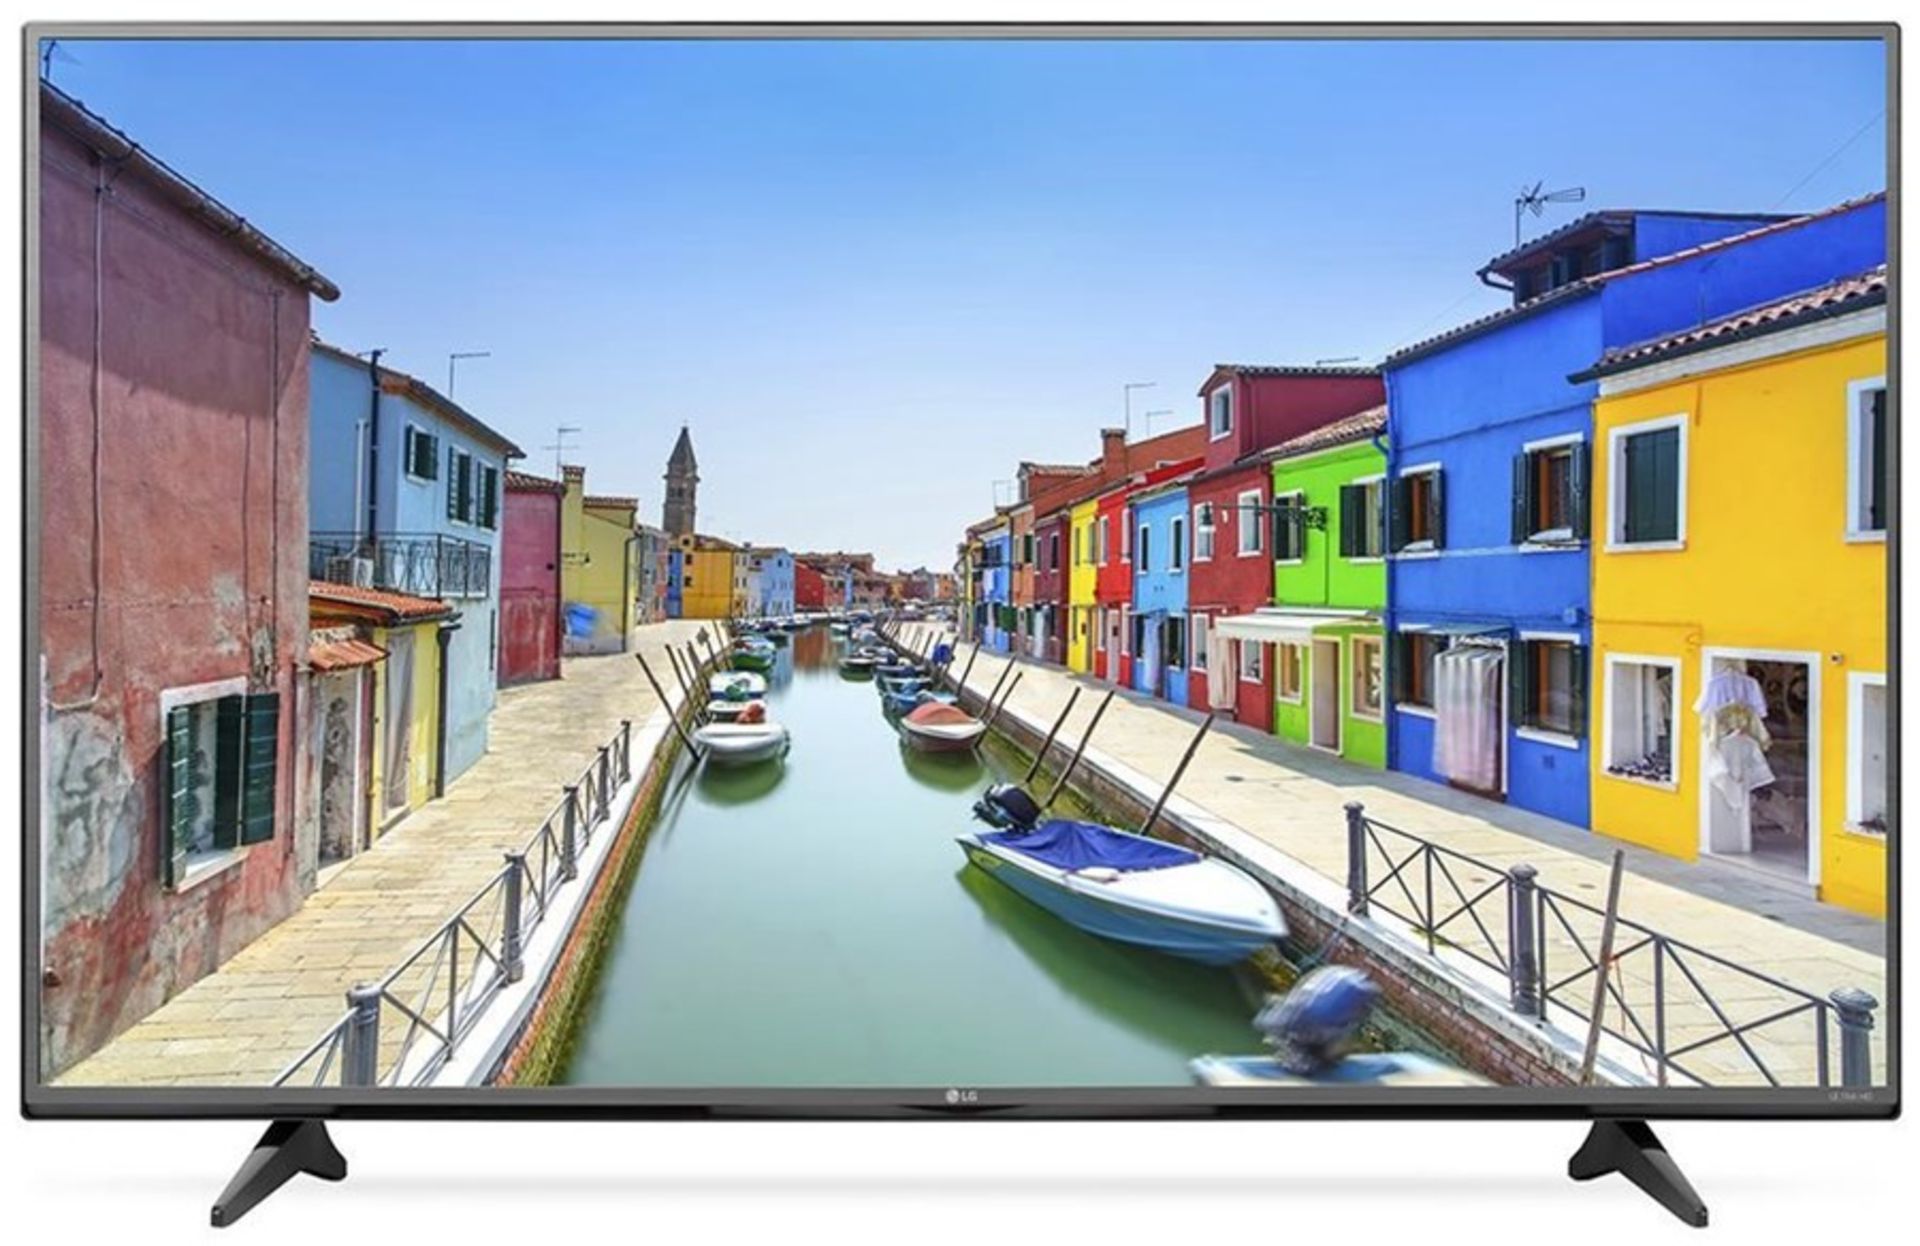 V Grade A LG 65" 4K Ultra HD Smart TV With WebOS 2.0 - WiFi Built In - Metallic Design - 4K Upscaler